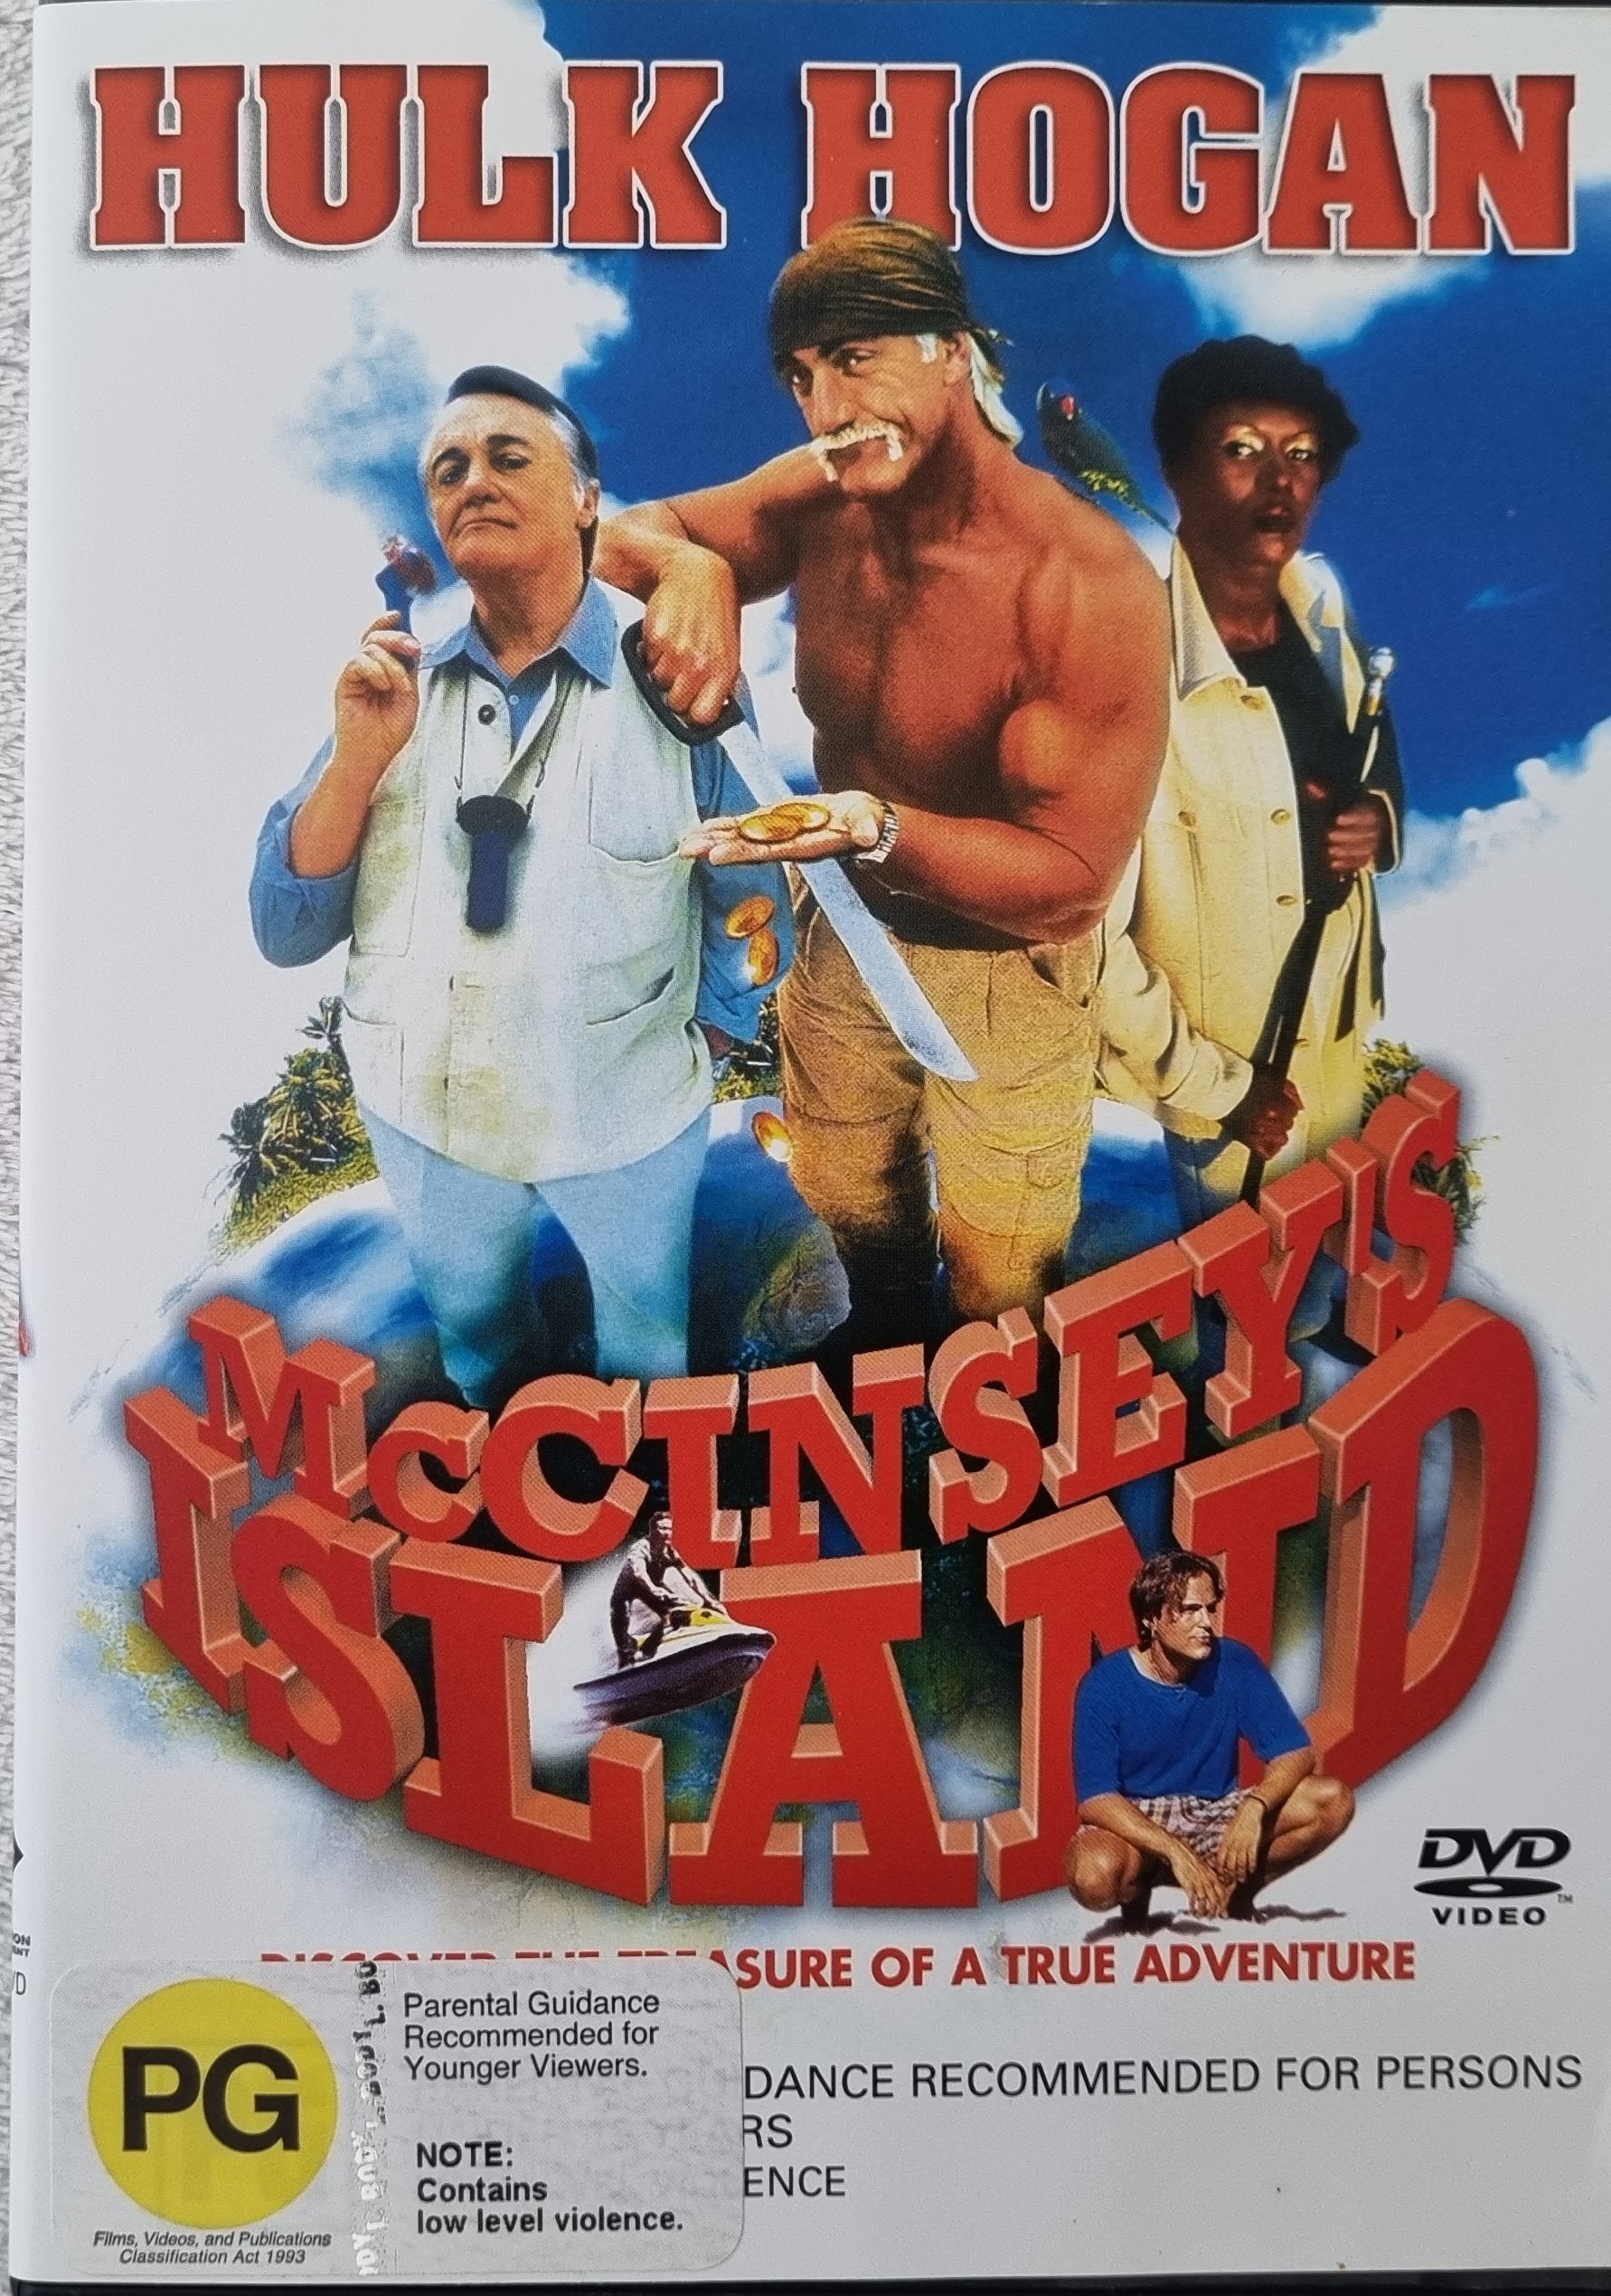 McCinsey's Island (Hulk Hogan)